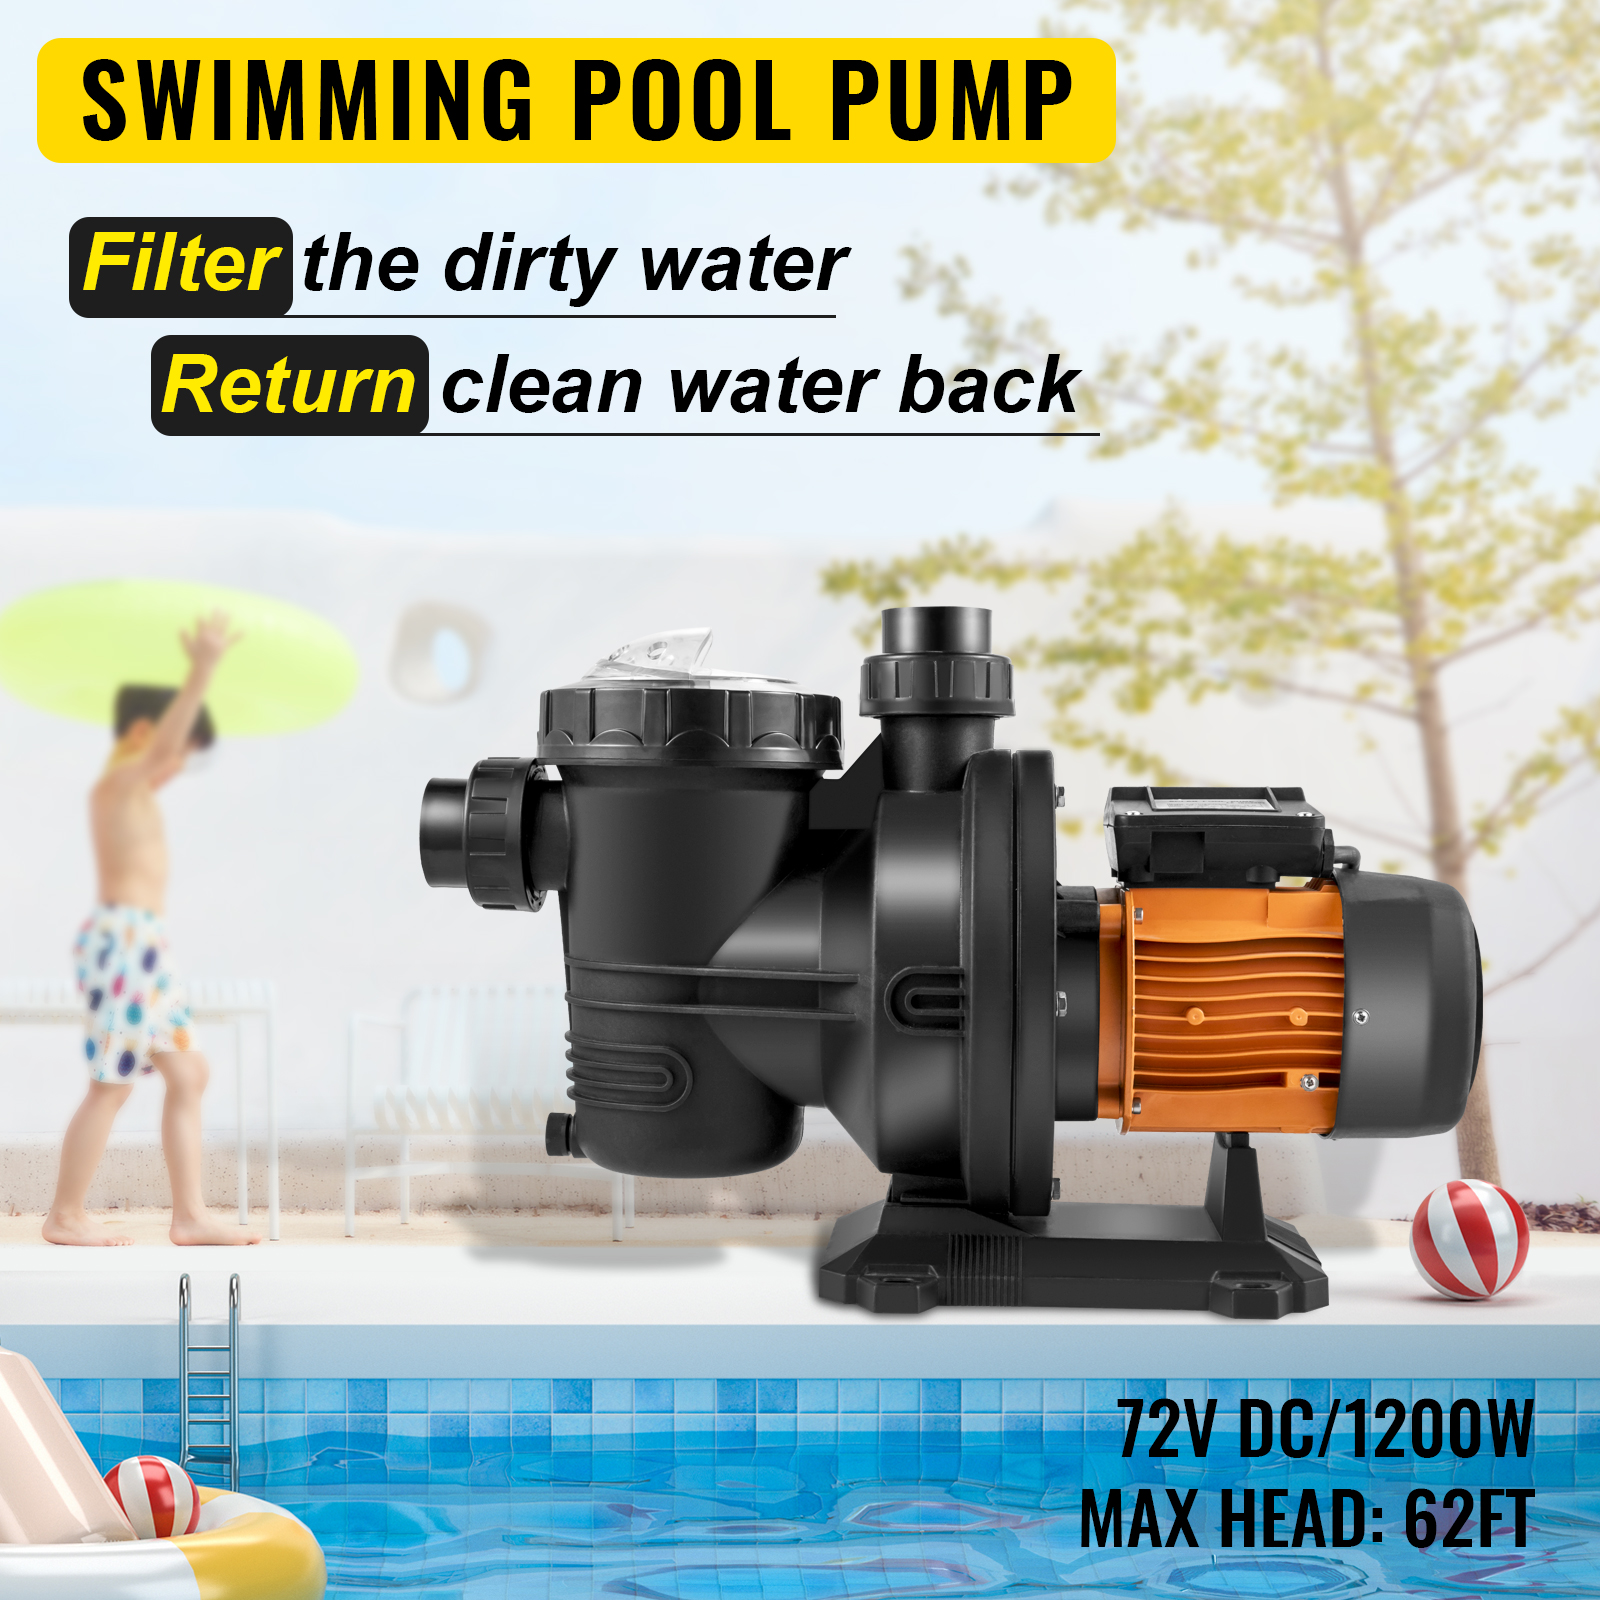 Swimming Pool Pump, 72 VDC, MPPT Controller